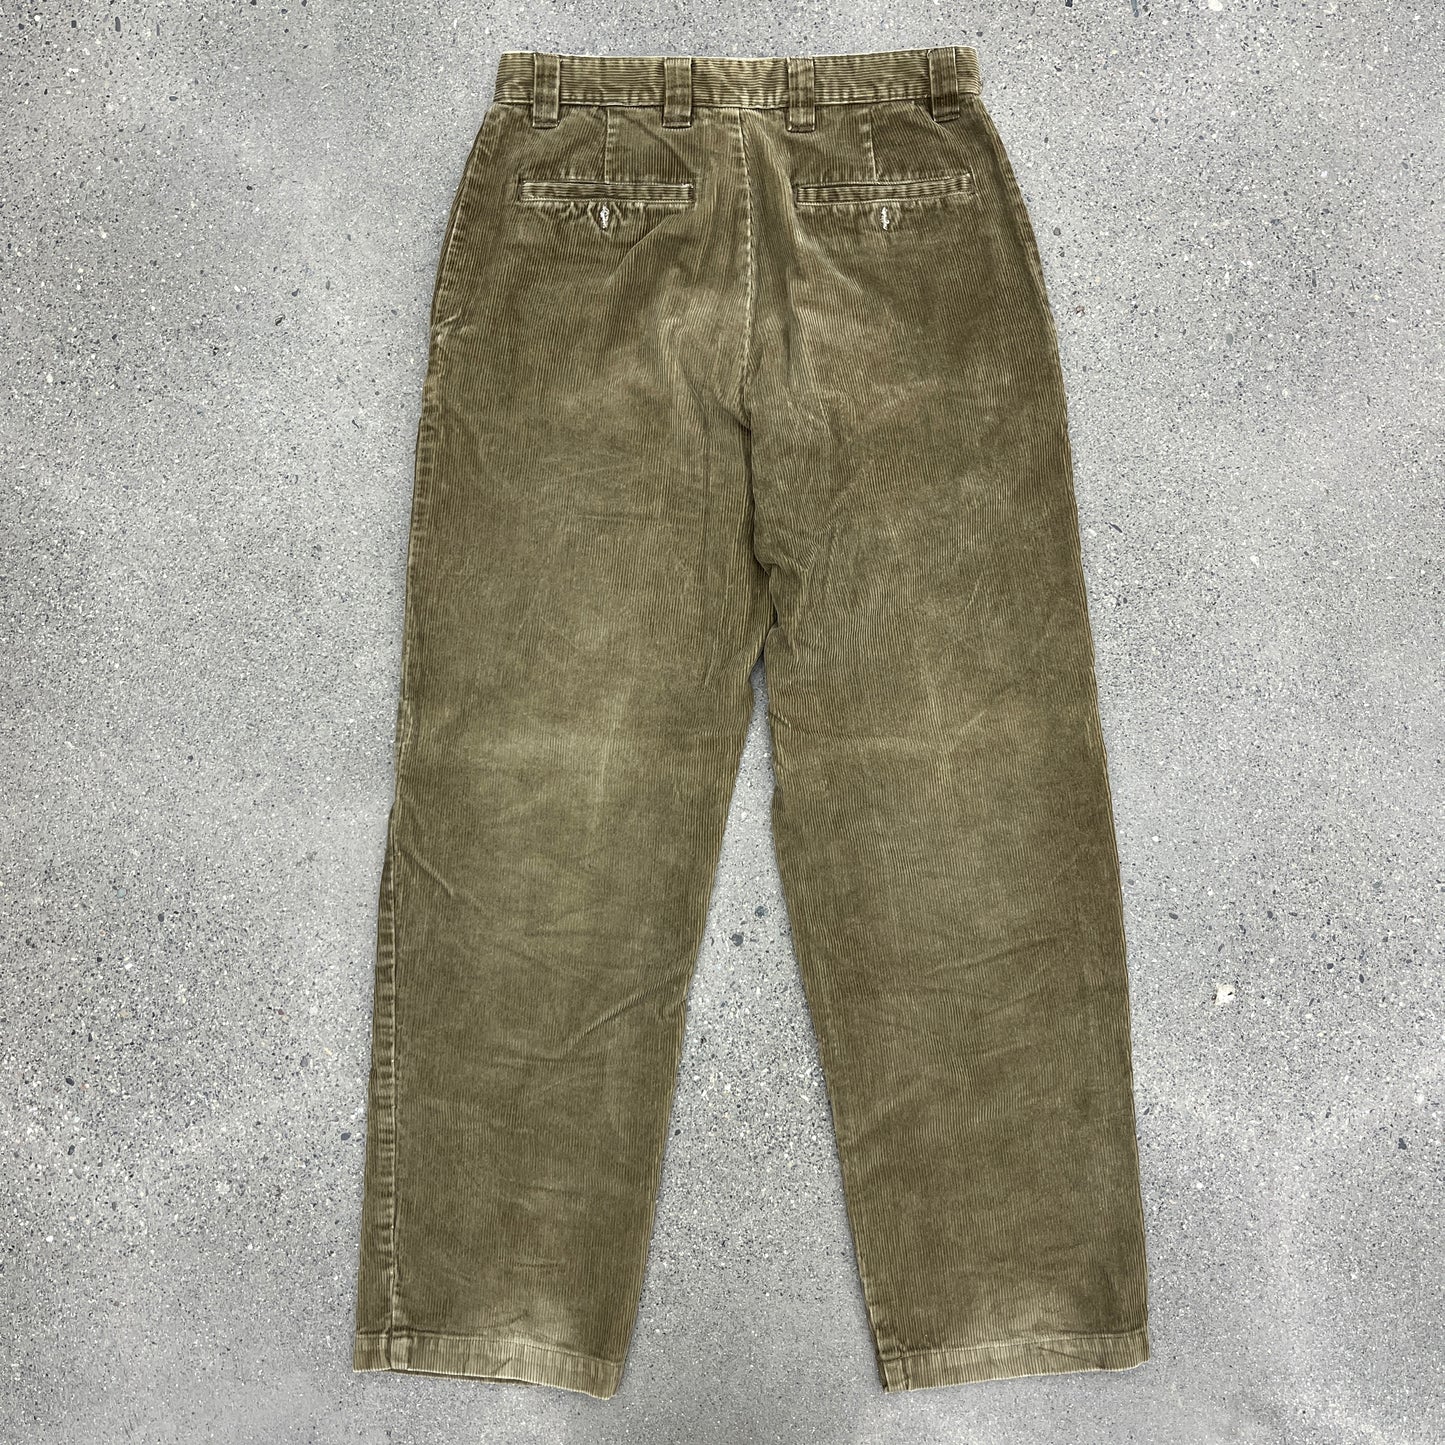 Vintage Corduroy Pants Olive SZ 30x30